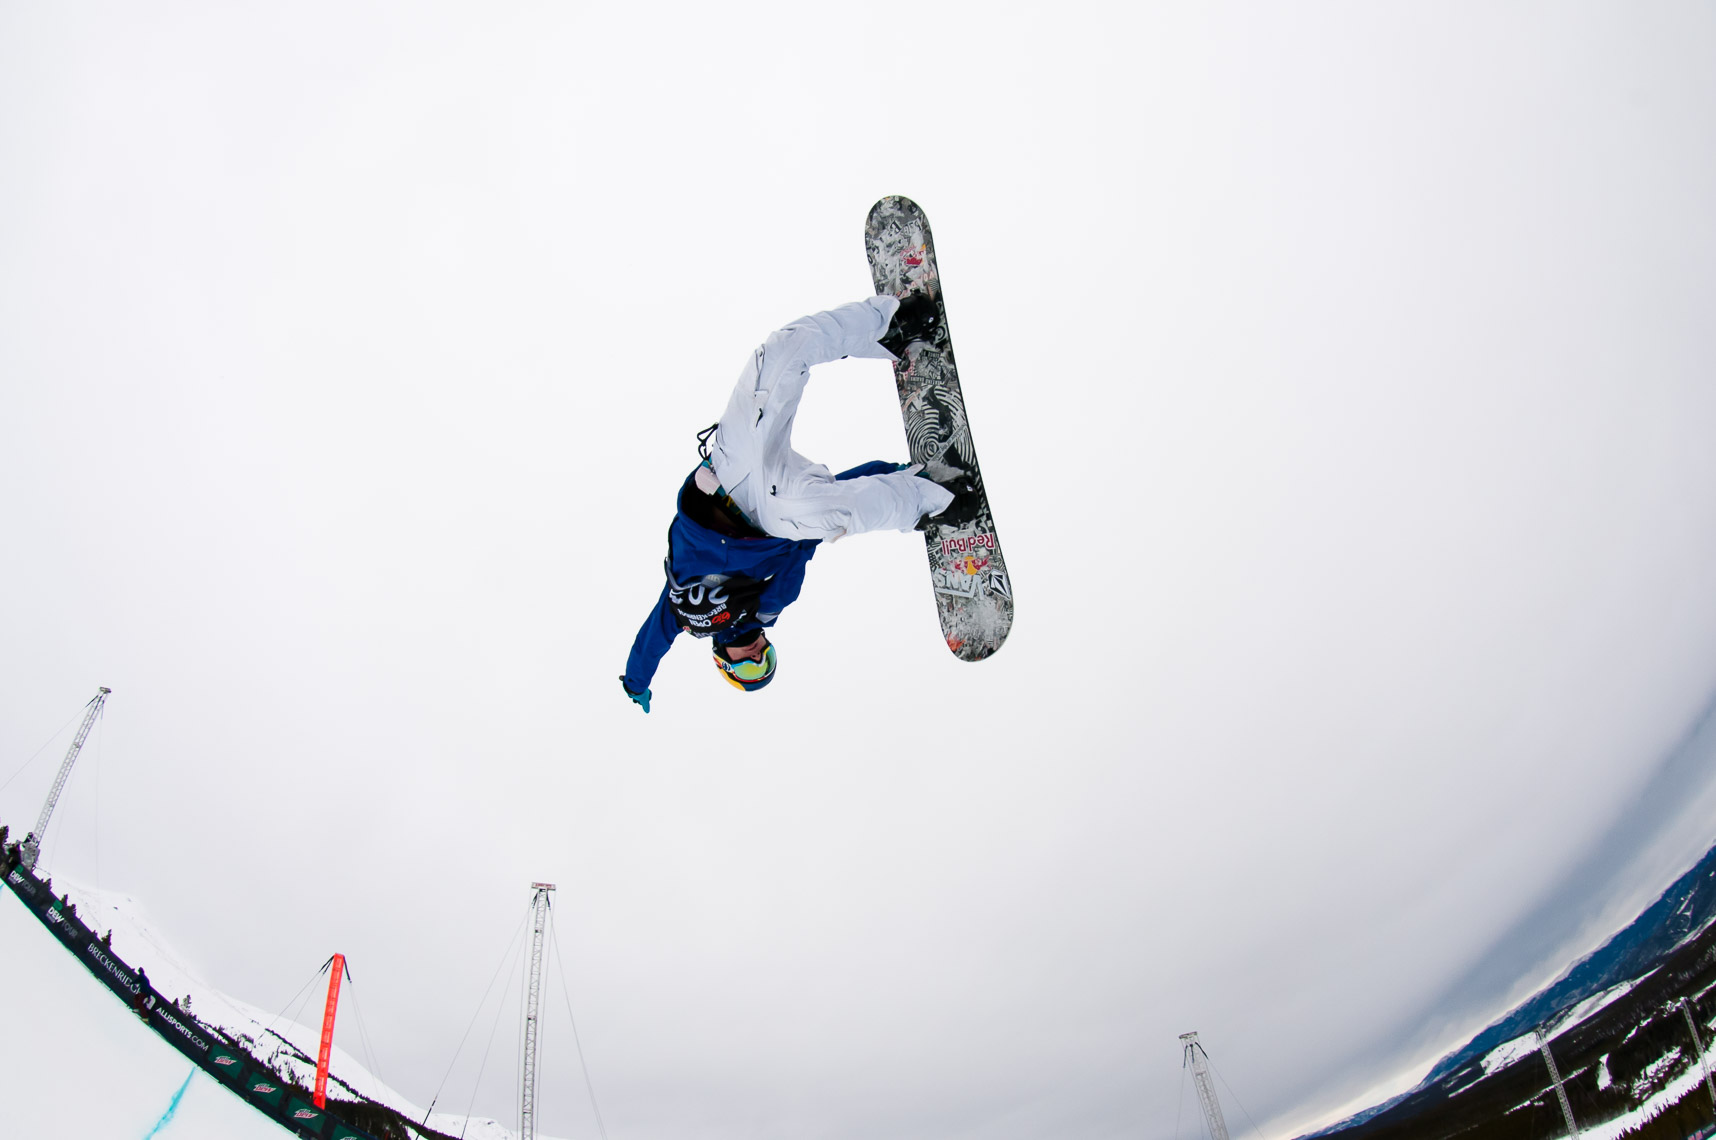 Snowboard Sports Photos